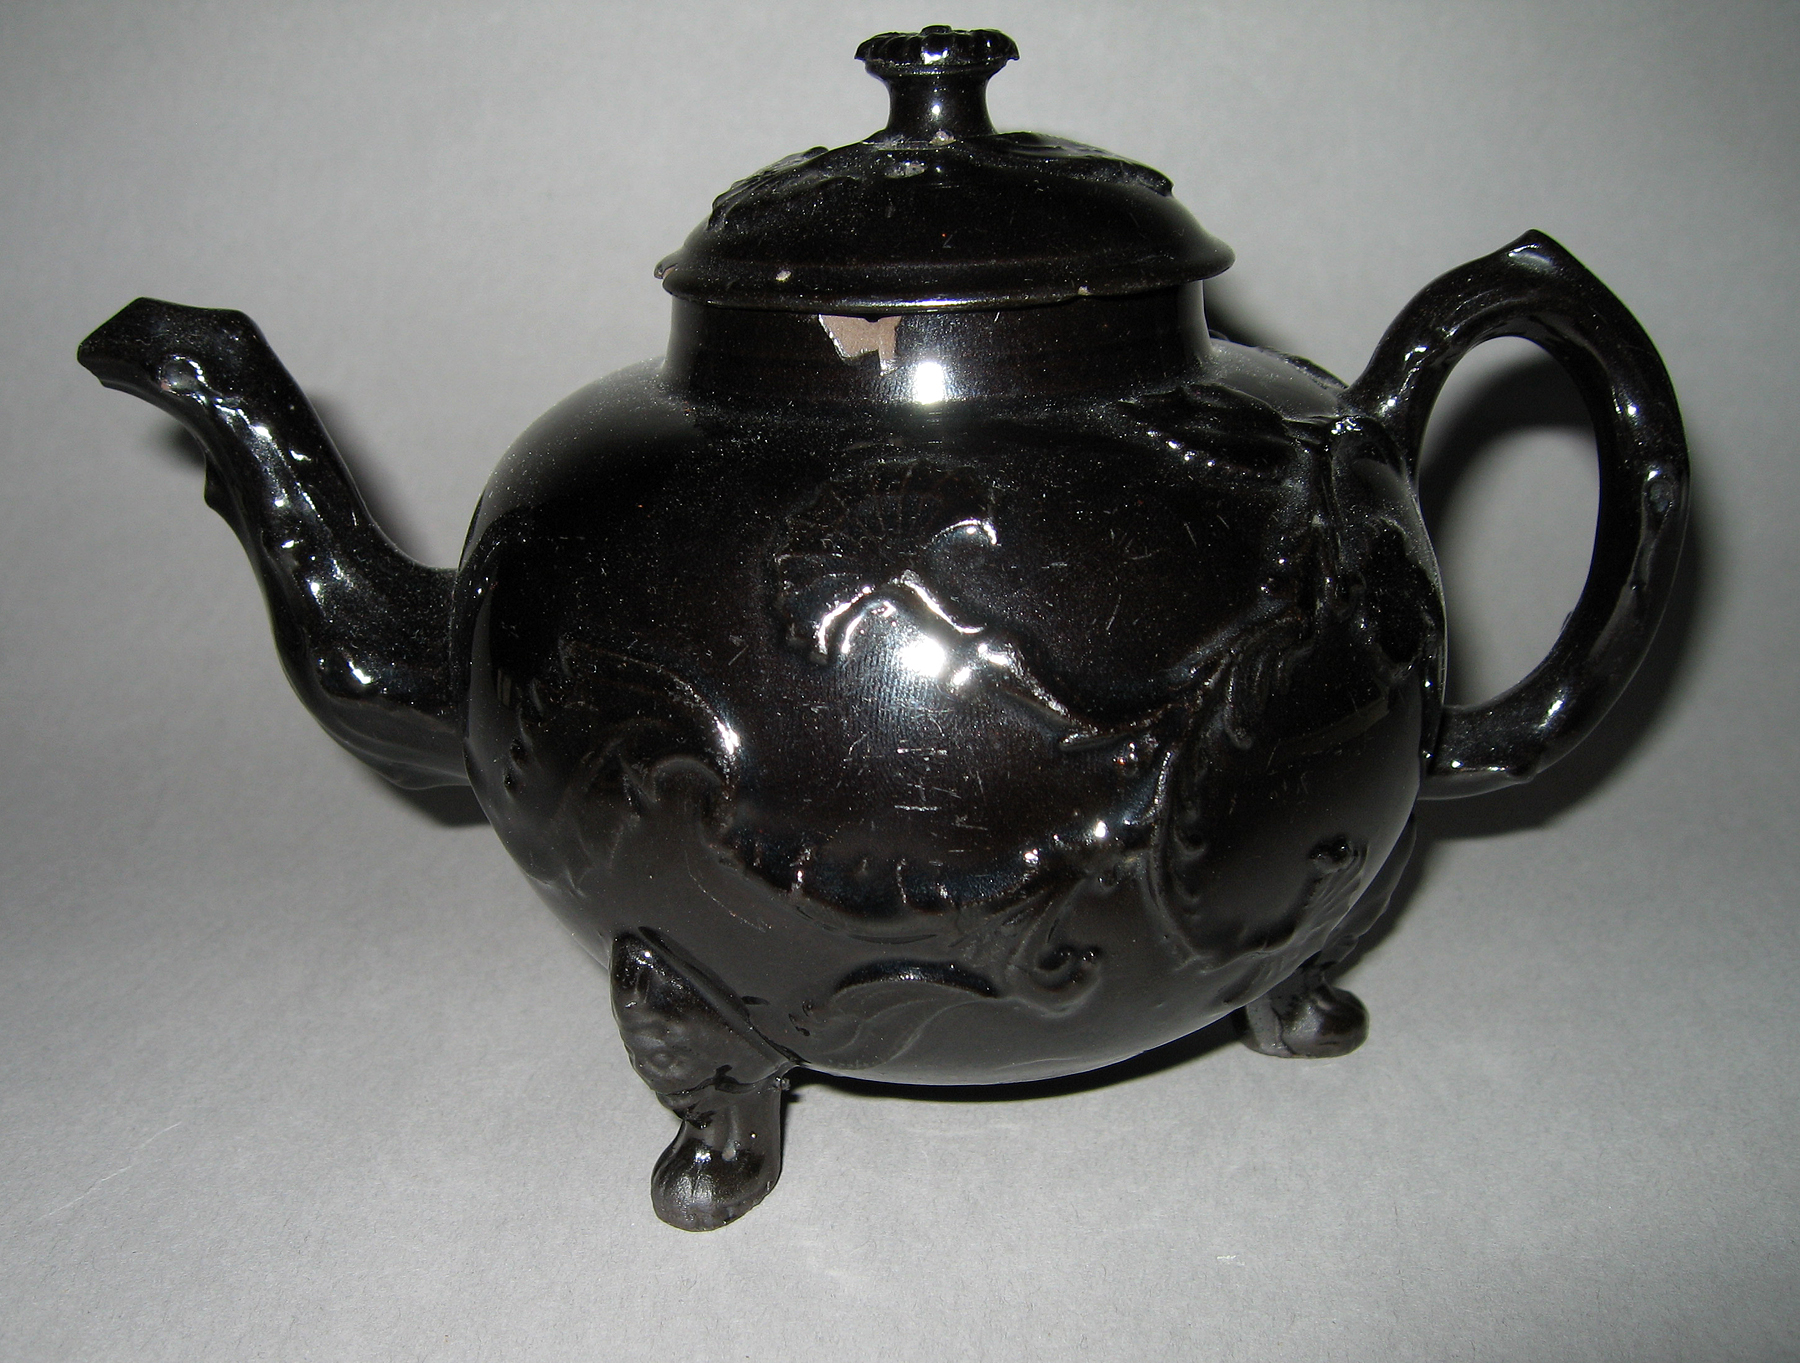 1955.0136.018 A, B Blackware teapot